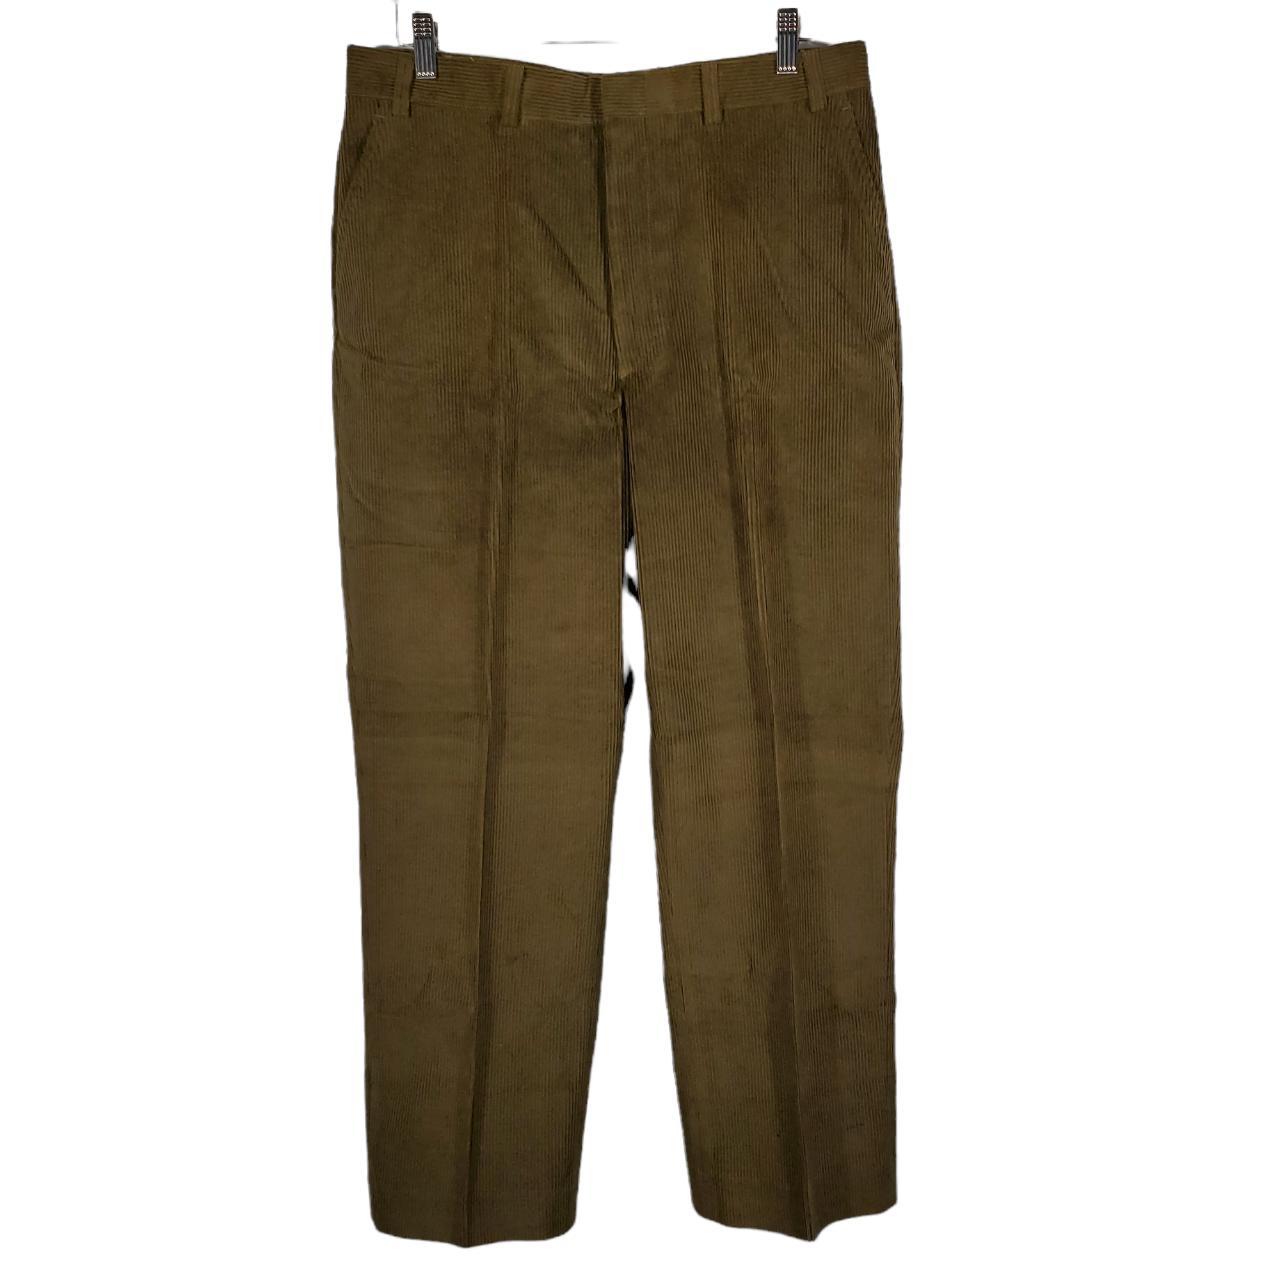 ORVIS Trousers Men's 2XL Elastic Waist Khaki Green Sweatpants | eBay